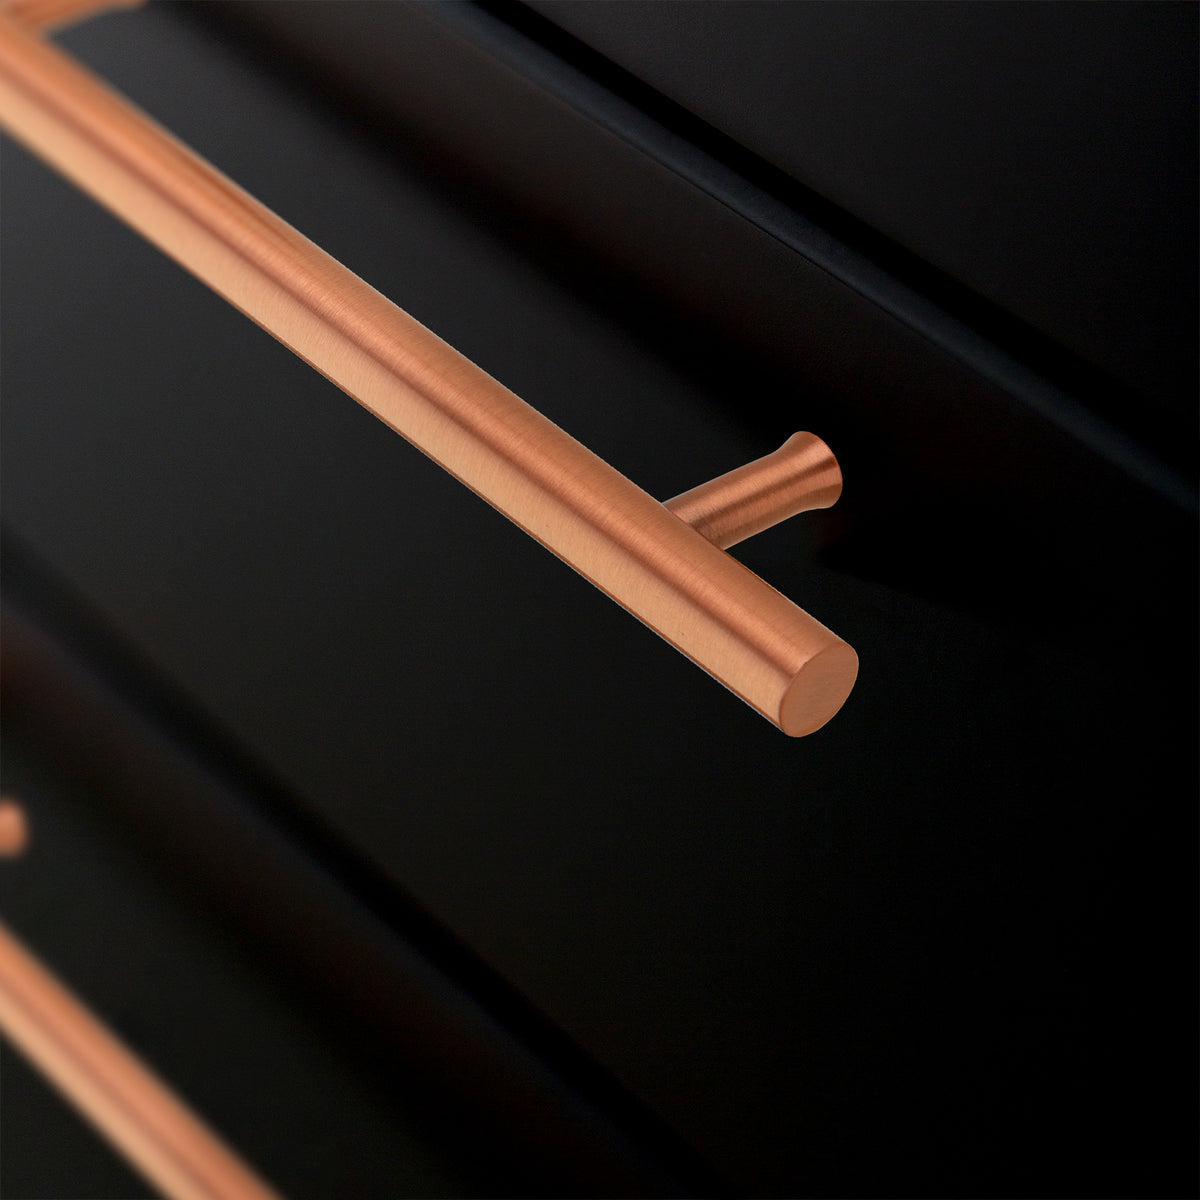 Akicon 5 Inch Hole Center Copper Kitchen Cabinet Handles 100% Solid Brass Drawer Pulls AK01932-C